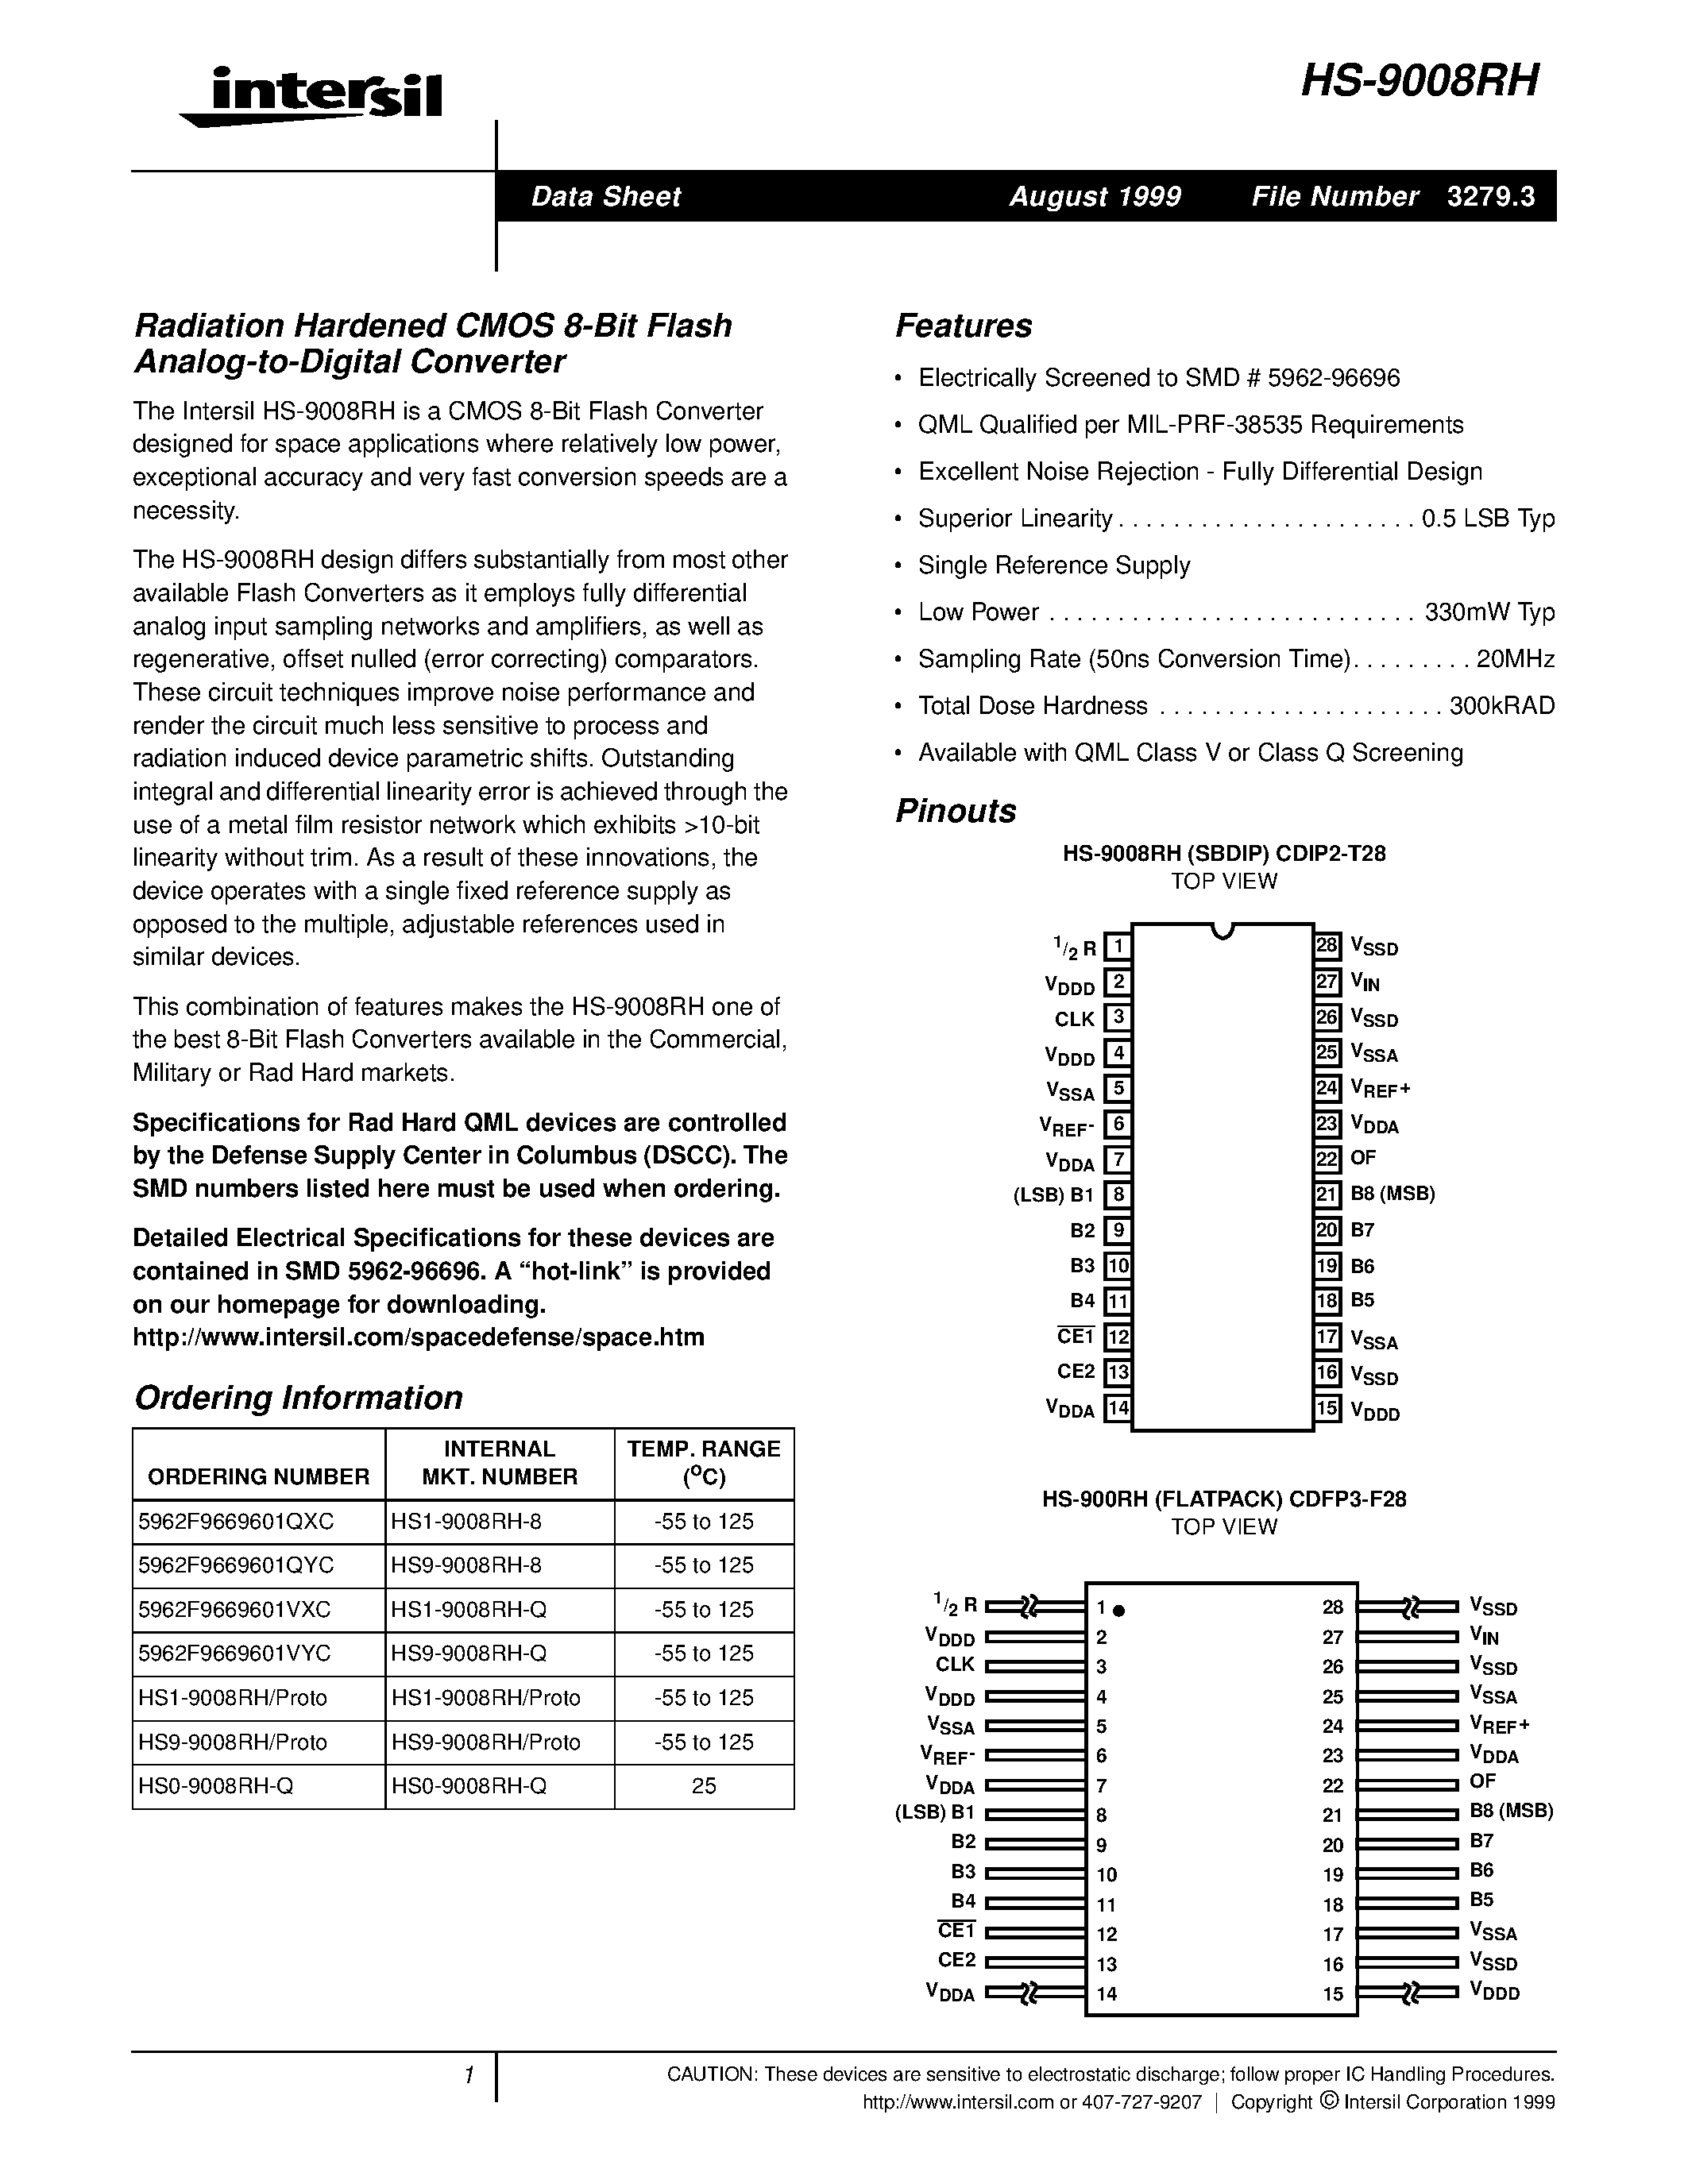 Datasheet HS9-9008RH-8 - Radiation Hardened CMOS 8-Bit Flash Analog-to-Digital Converter page 1